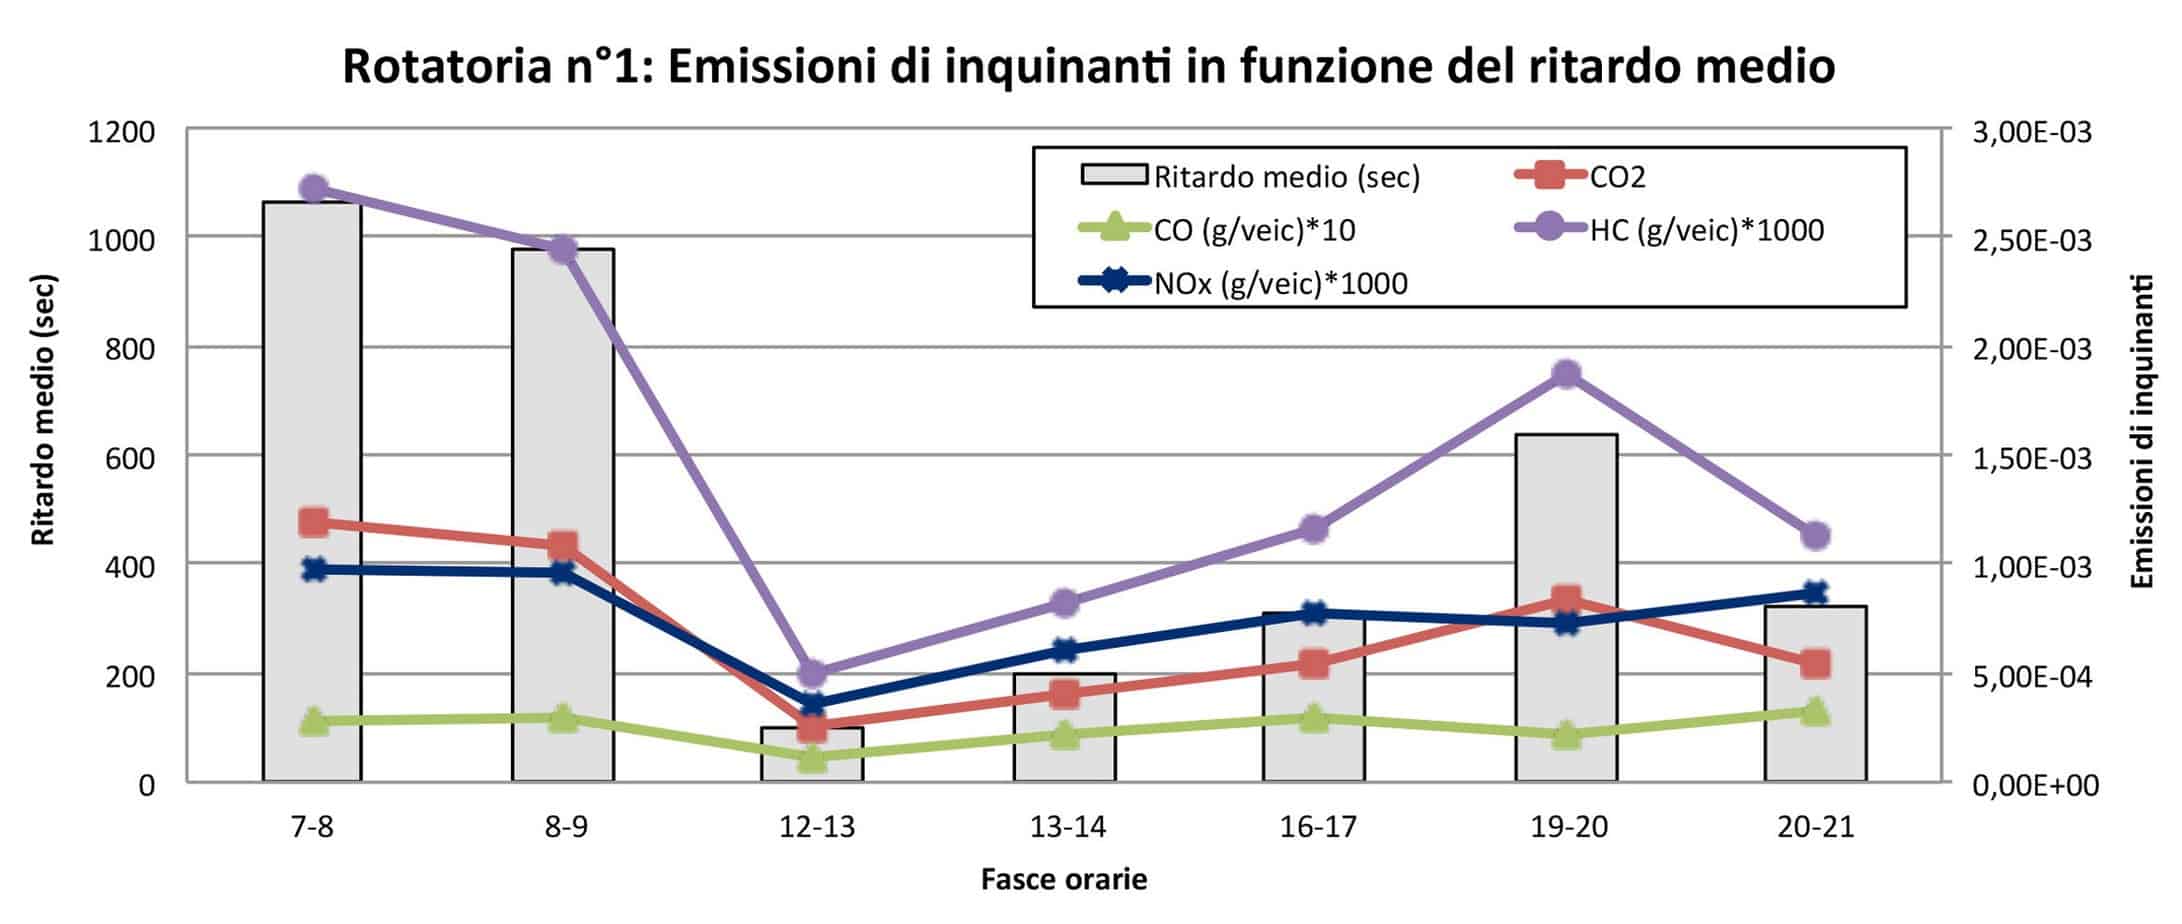 Le emissioni di inquinanti in funzione del ritardo medio (rotatoria n° 1)